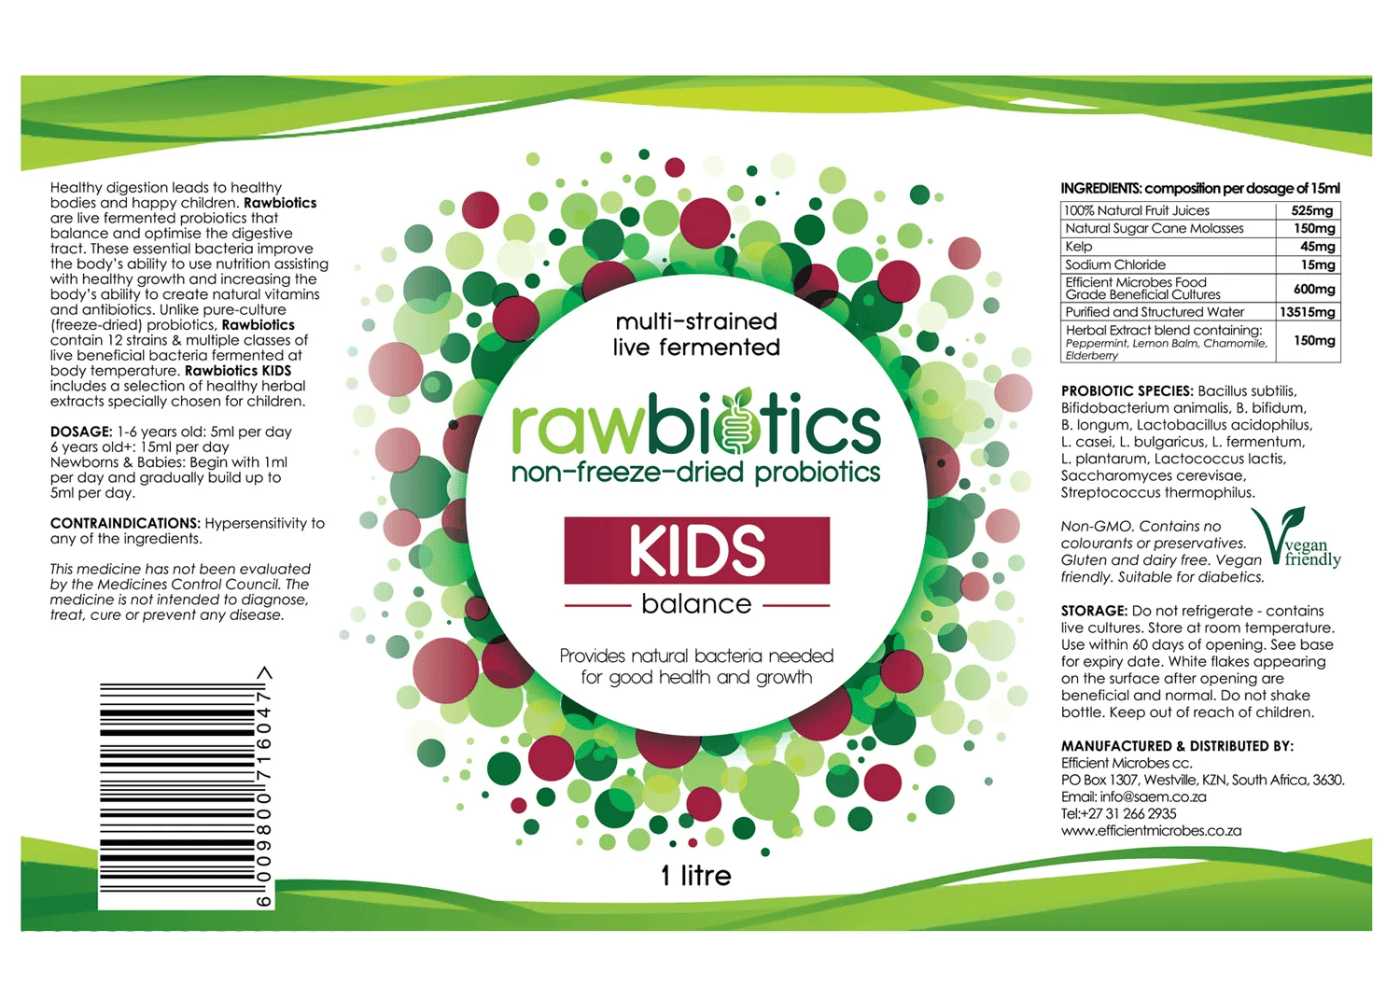 Rawbiotics-Kids-1-litre-Nutritional-Information